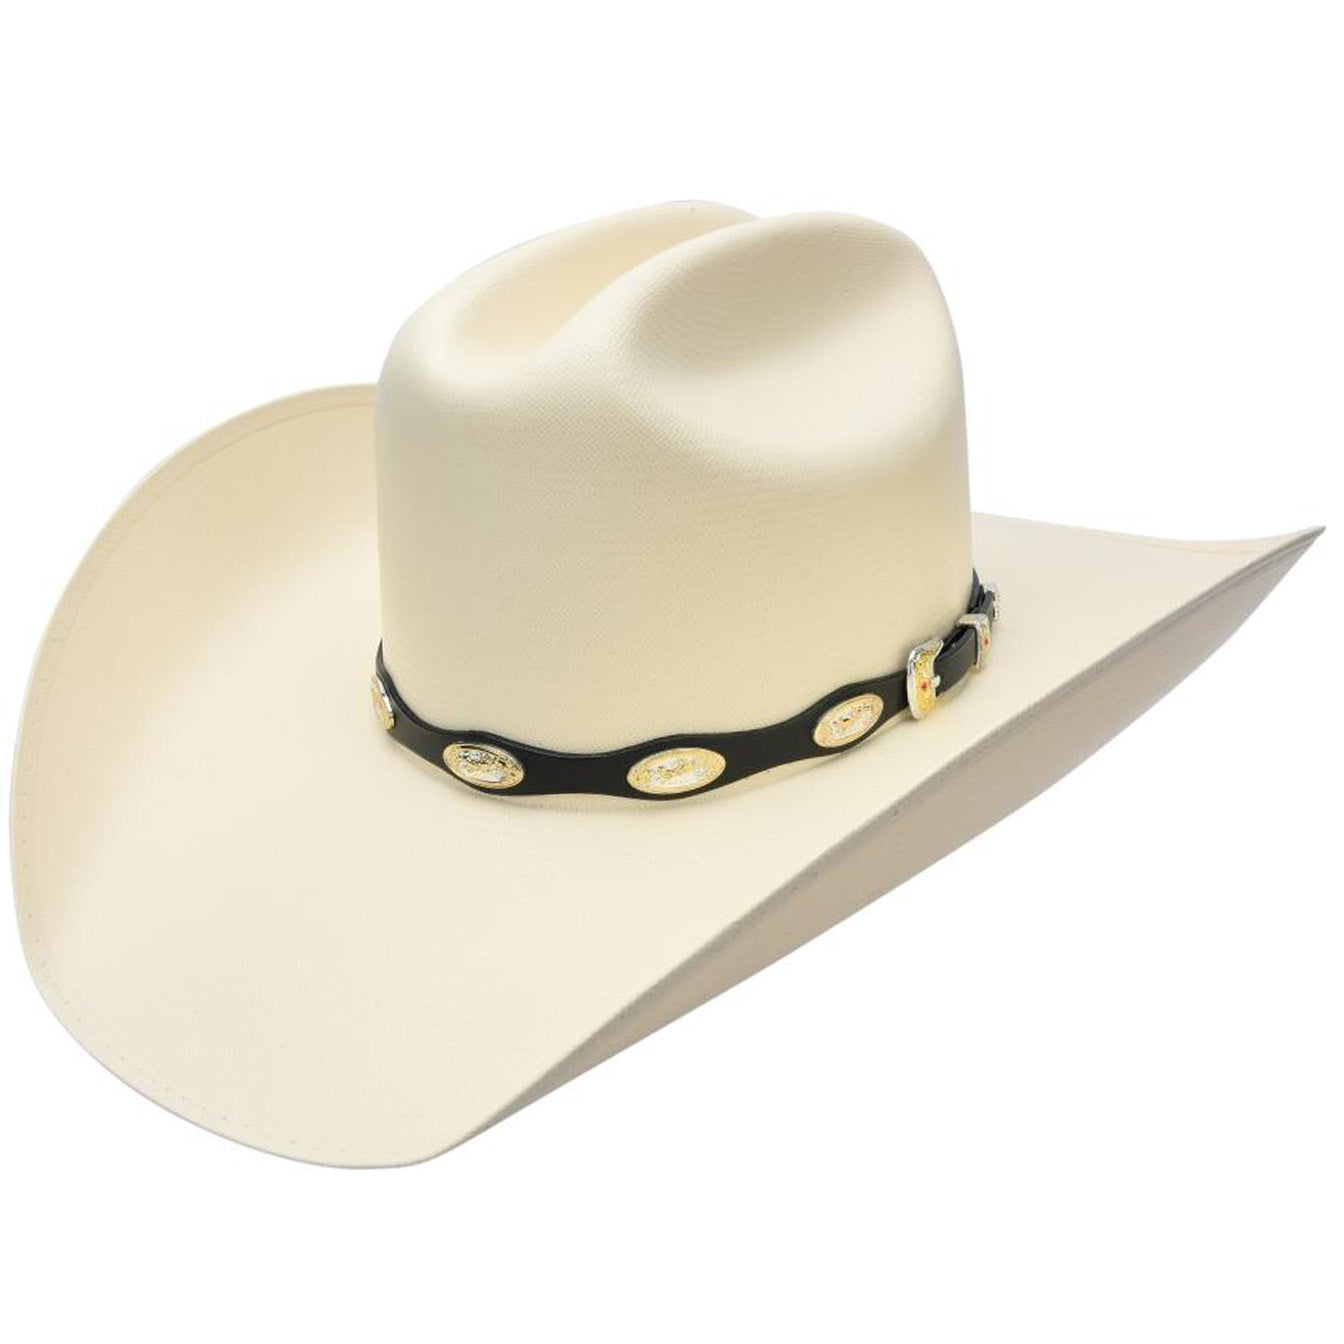 Sombrero vaquero Cowboy hat accessories leather hat Panama hat belt series  hat belt buckle Unisex Western cowboy accessories